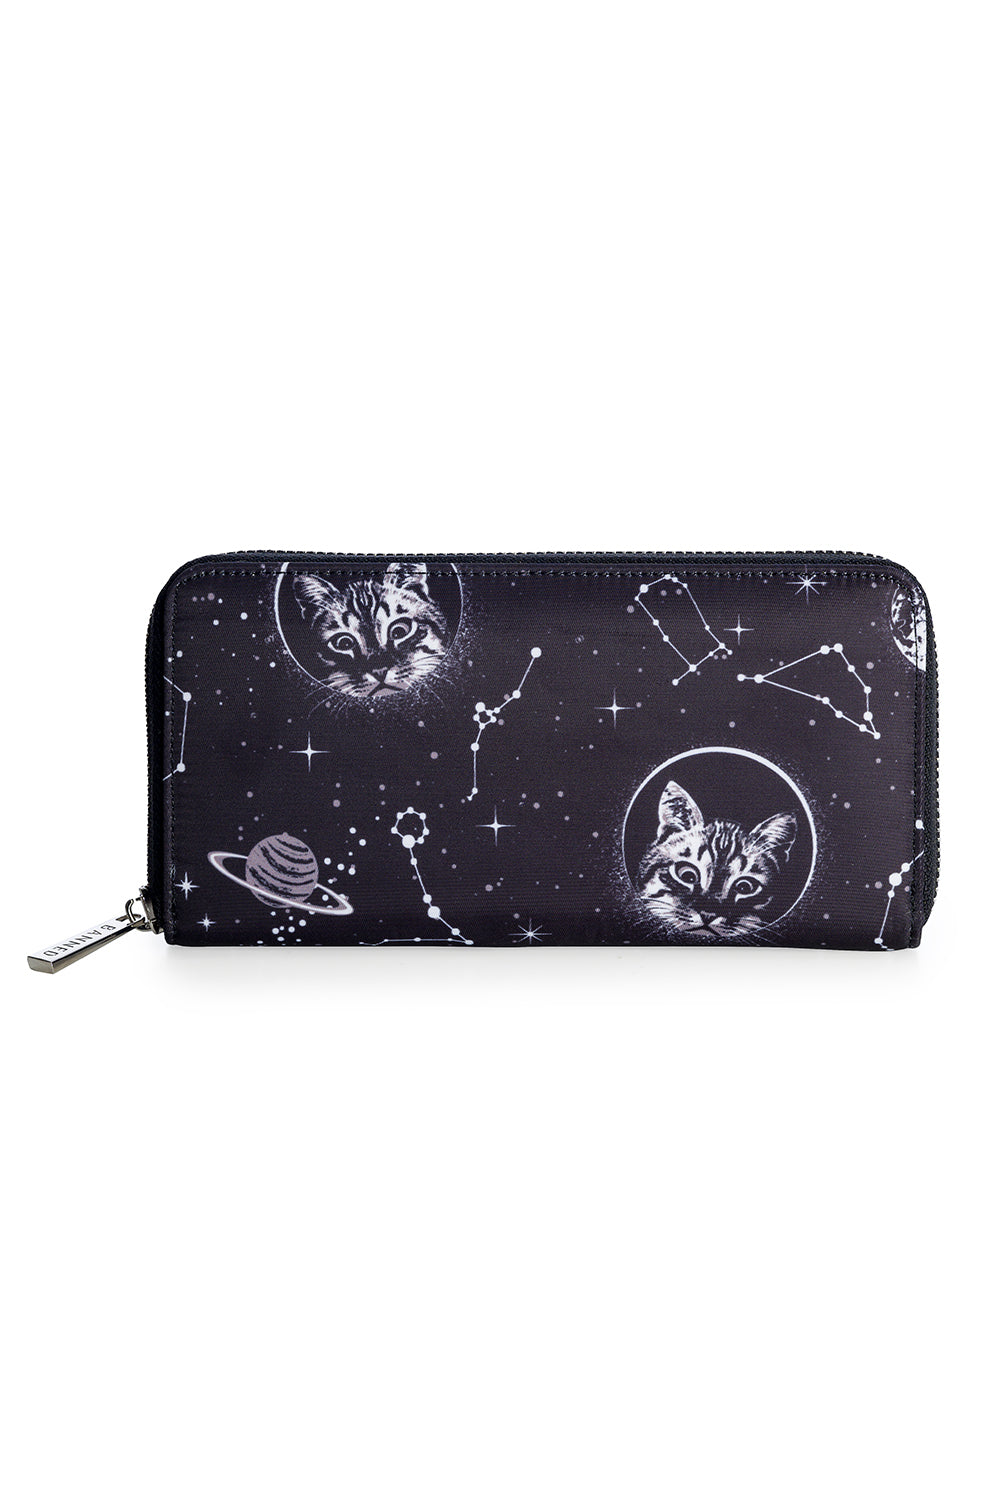 Banned Alternative Space Kitty Zip Wallet